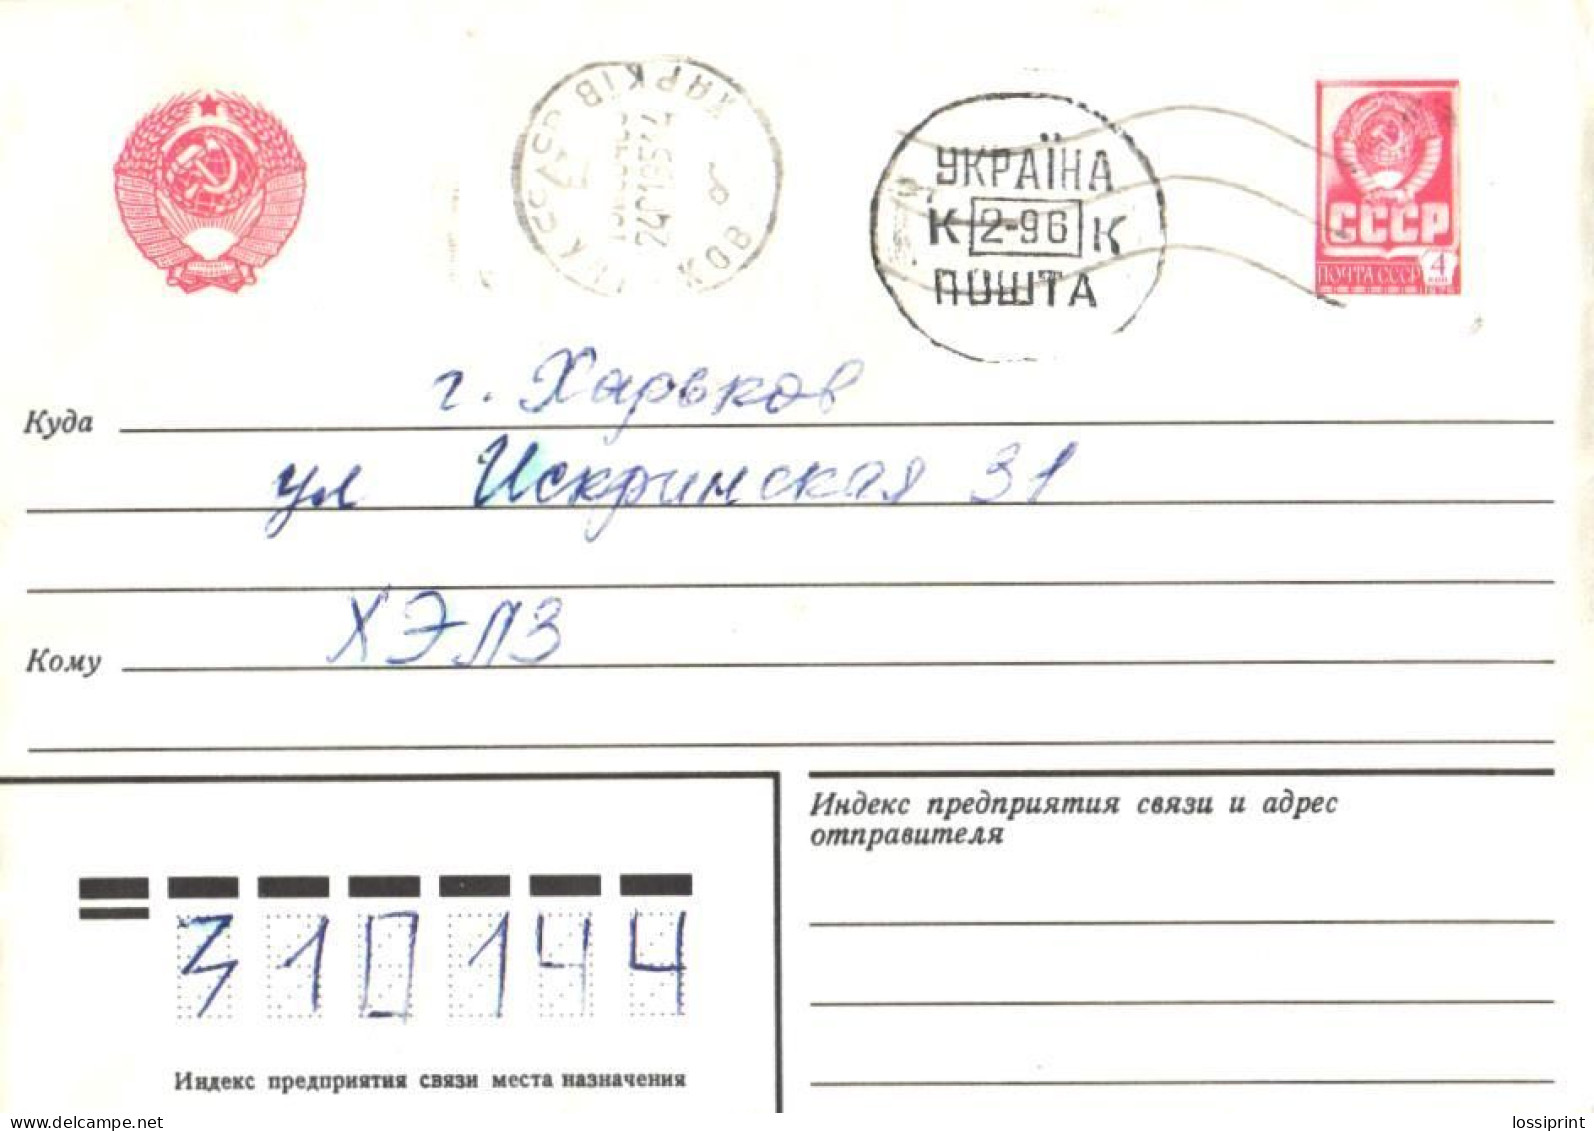 Ukraine:Ukraina:Letter From Harkov With 2,96K Cancellation, 1995 - Ukraine